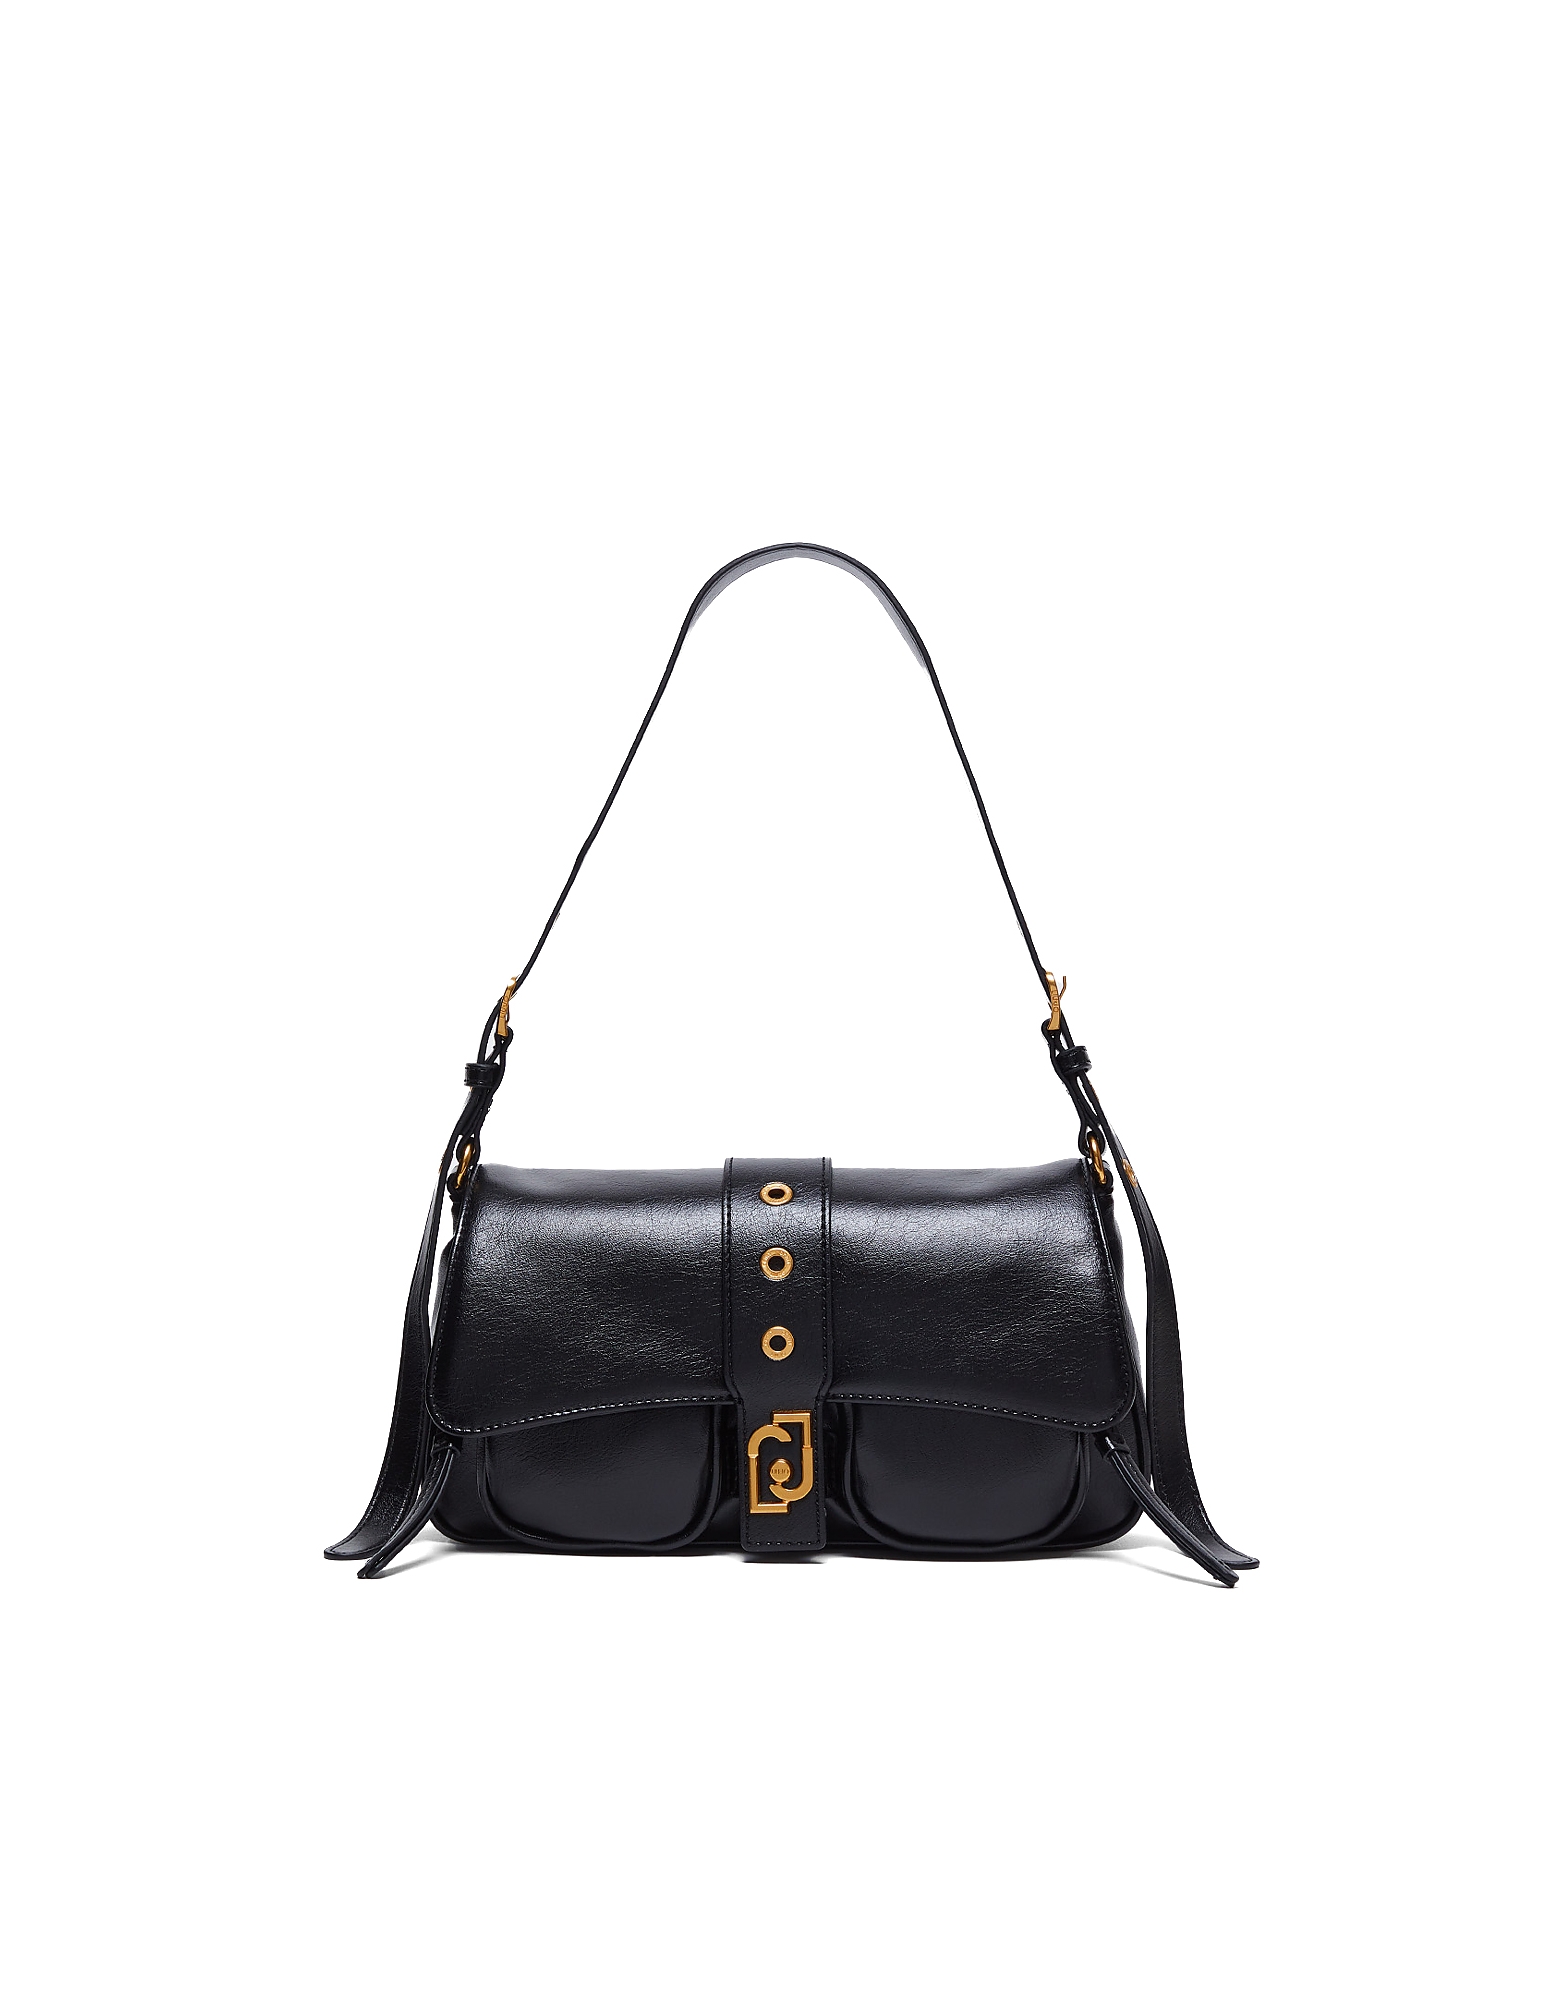 Liu •jo Designer Handbags Women's Black Bag